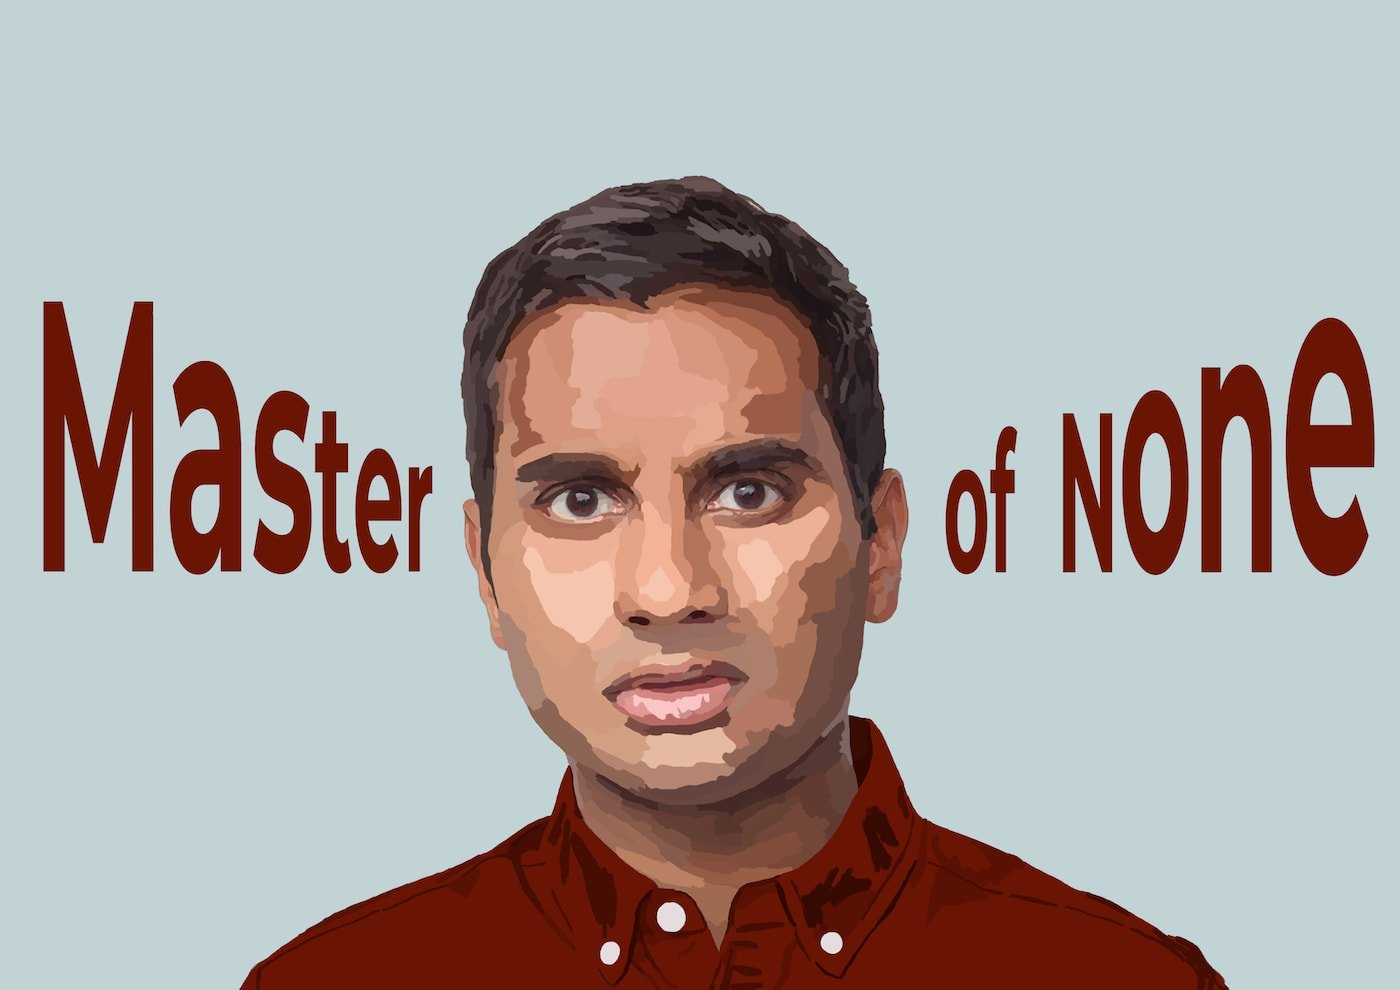 Digitally painted image of the creator and star; Aziz Ansari